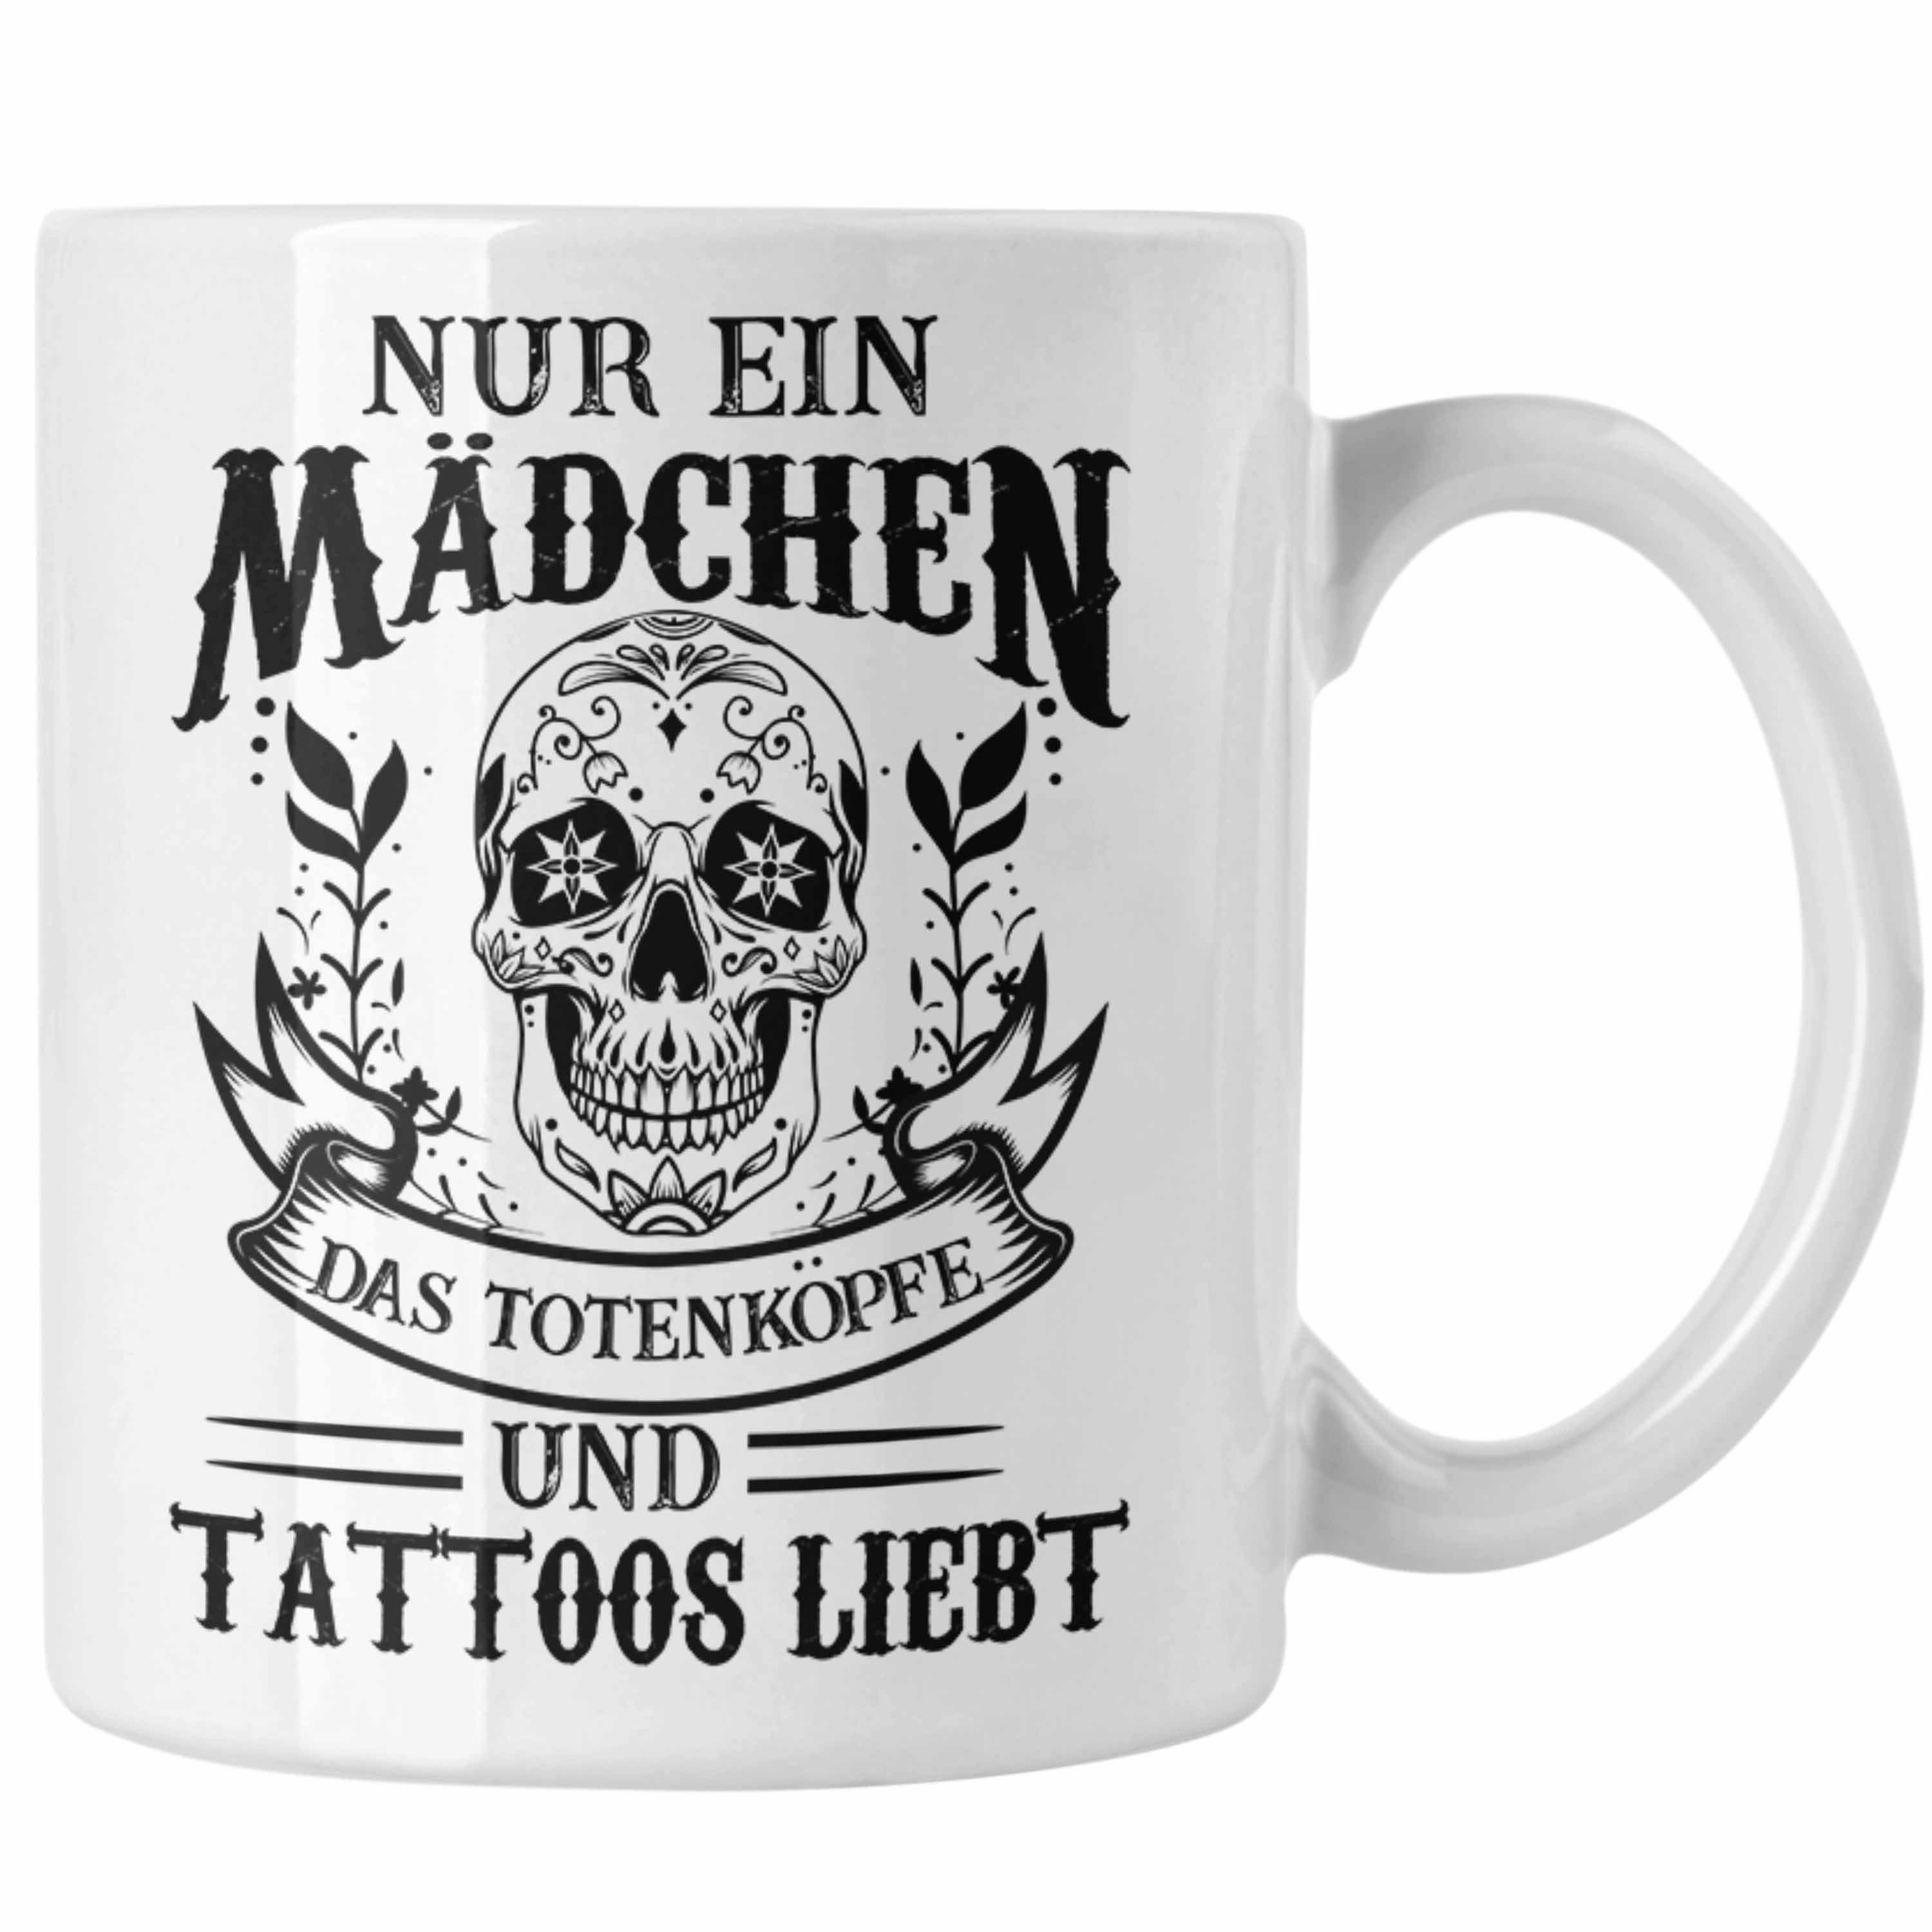 Trendation Tasse Trendation - Tattoos Frauen Tasse Tätowiererin Geschenk Kaffeetasse Tattoo Totenkopf Tassen Weiss